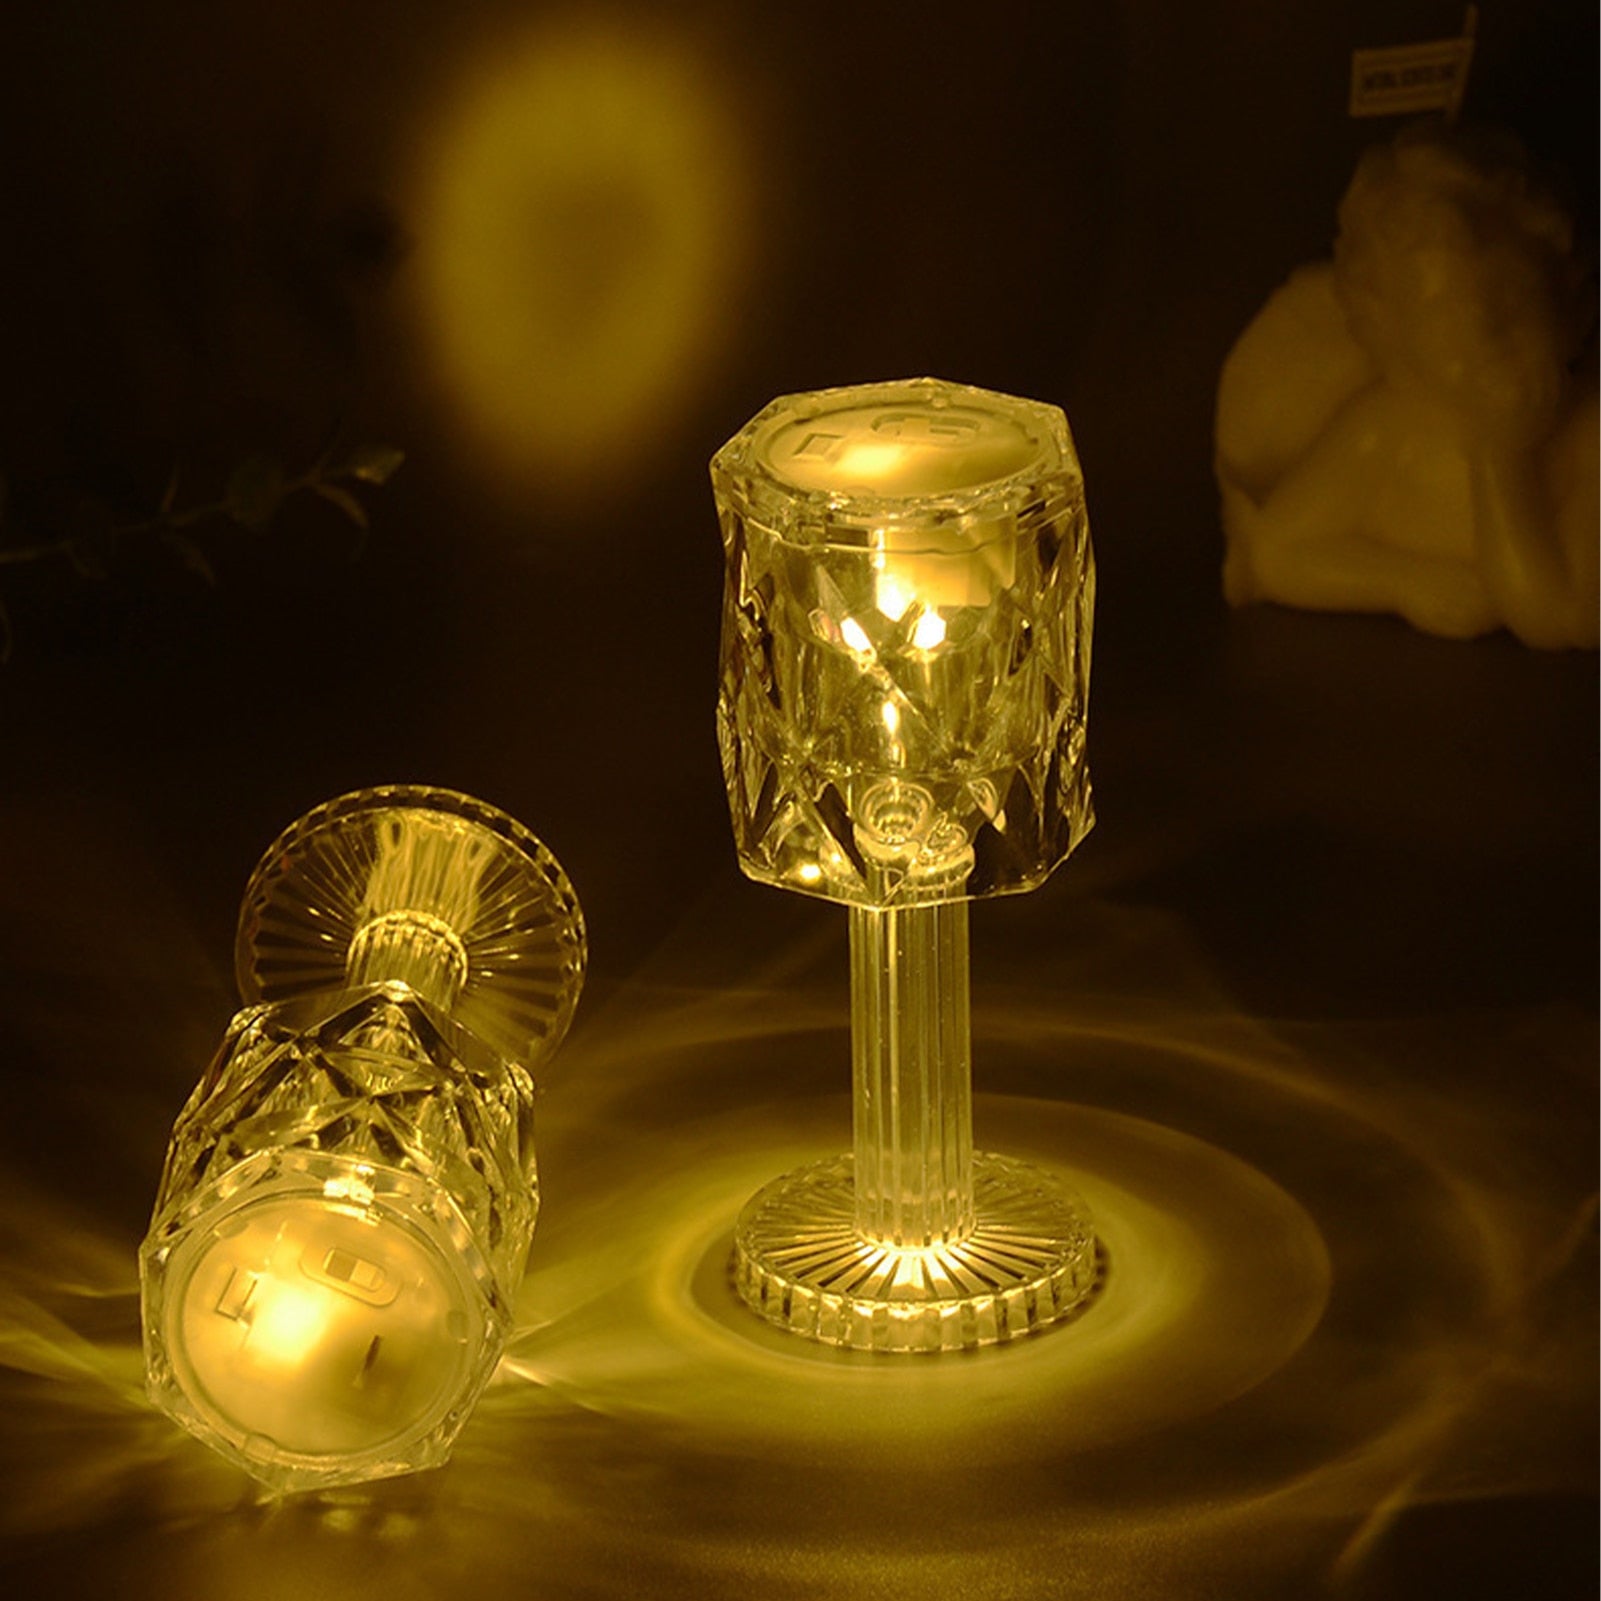 Crystal Table Lamp Night Light